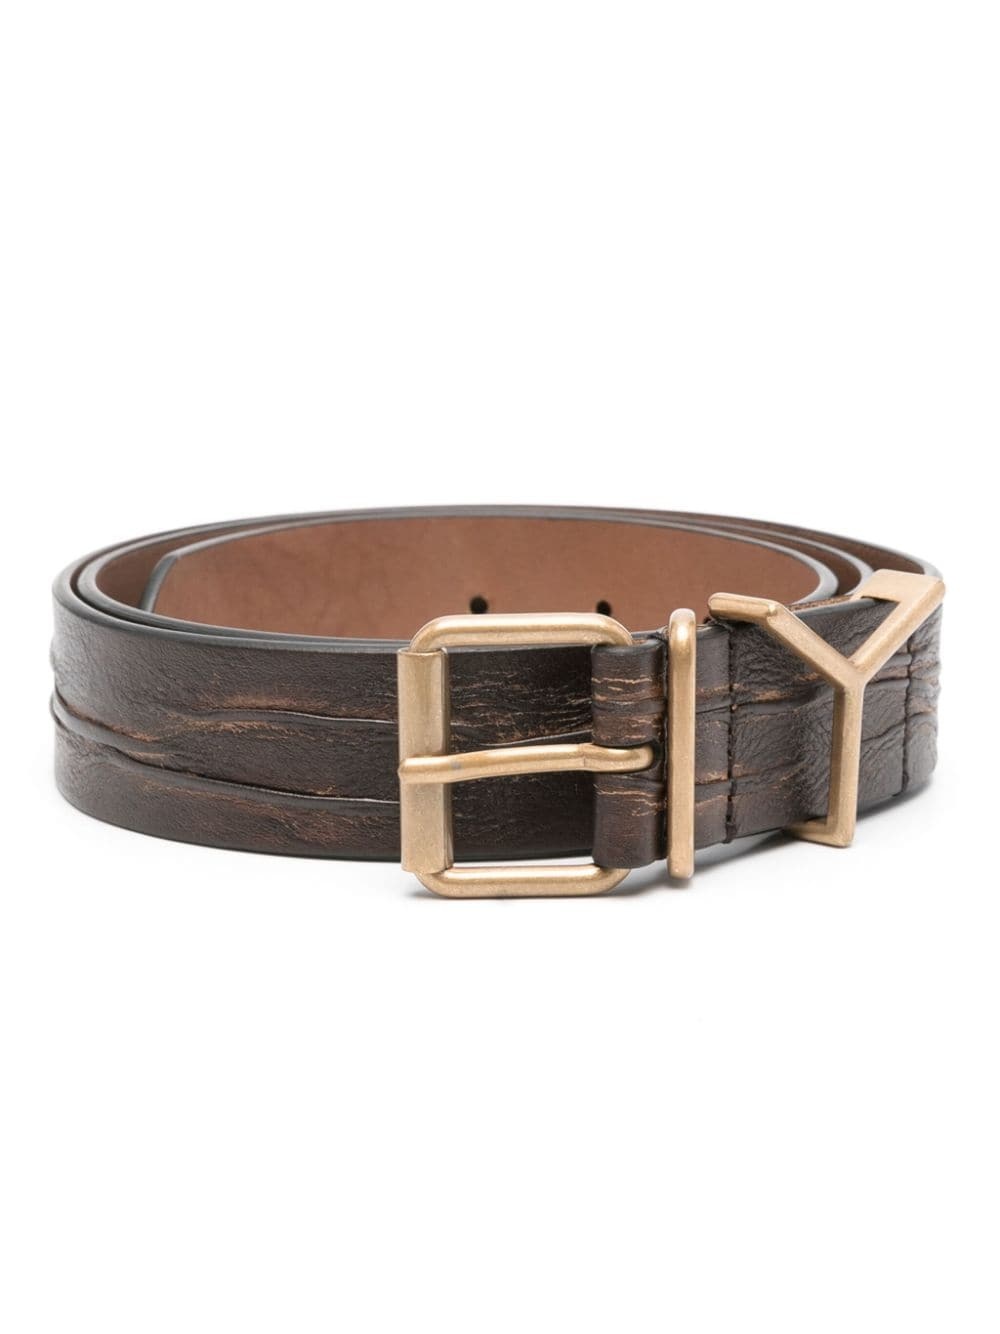 Y-hardware leather belt - 1